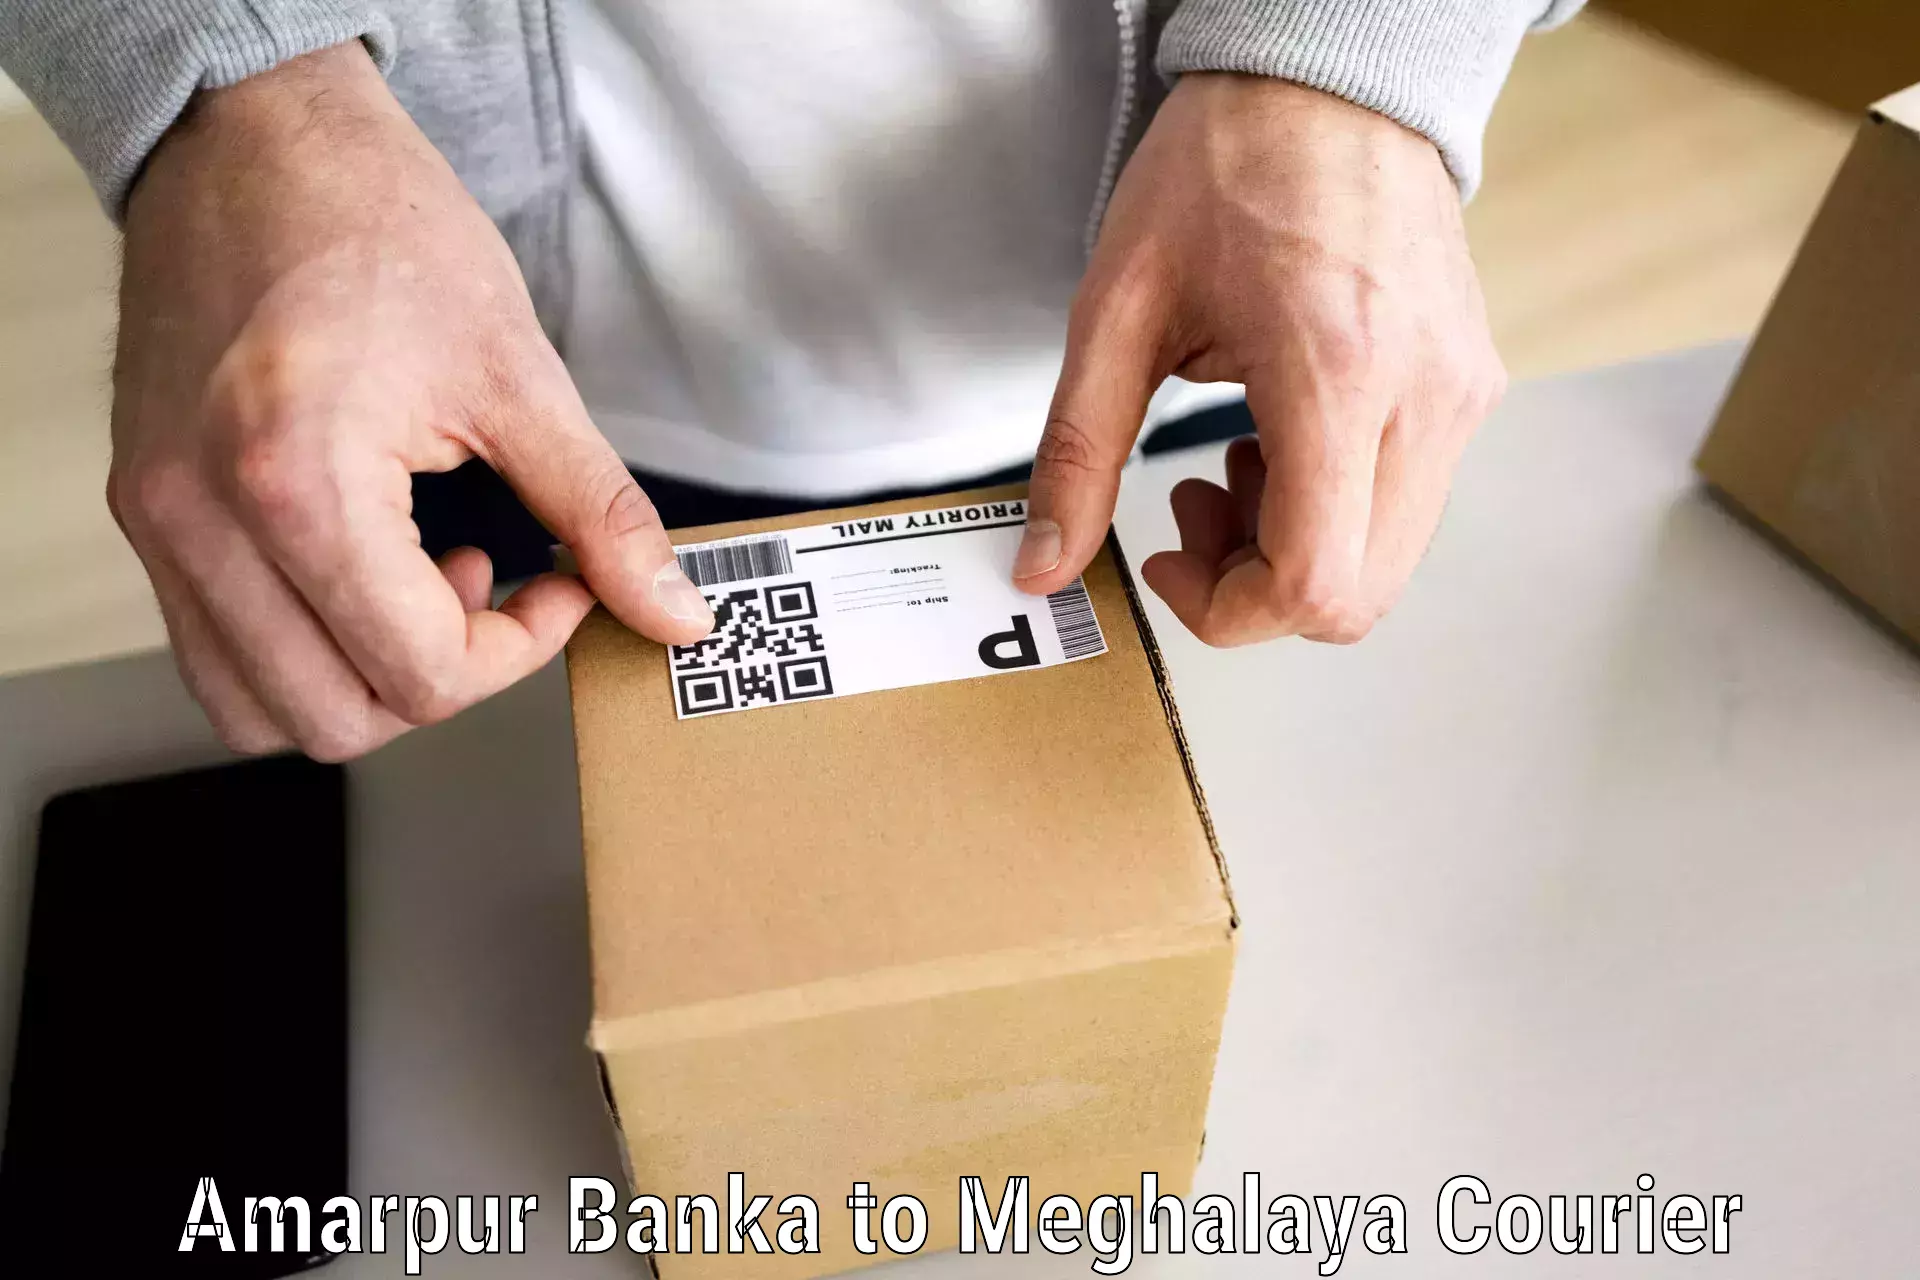 Moving service excellence Amarpur Banka to Meghalaya